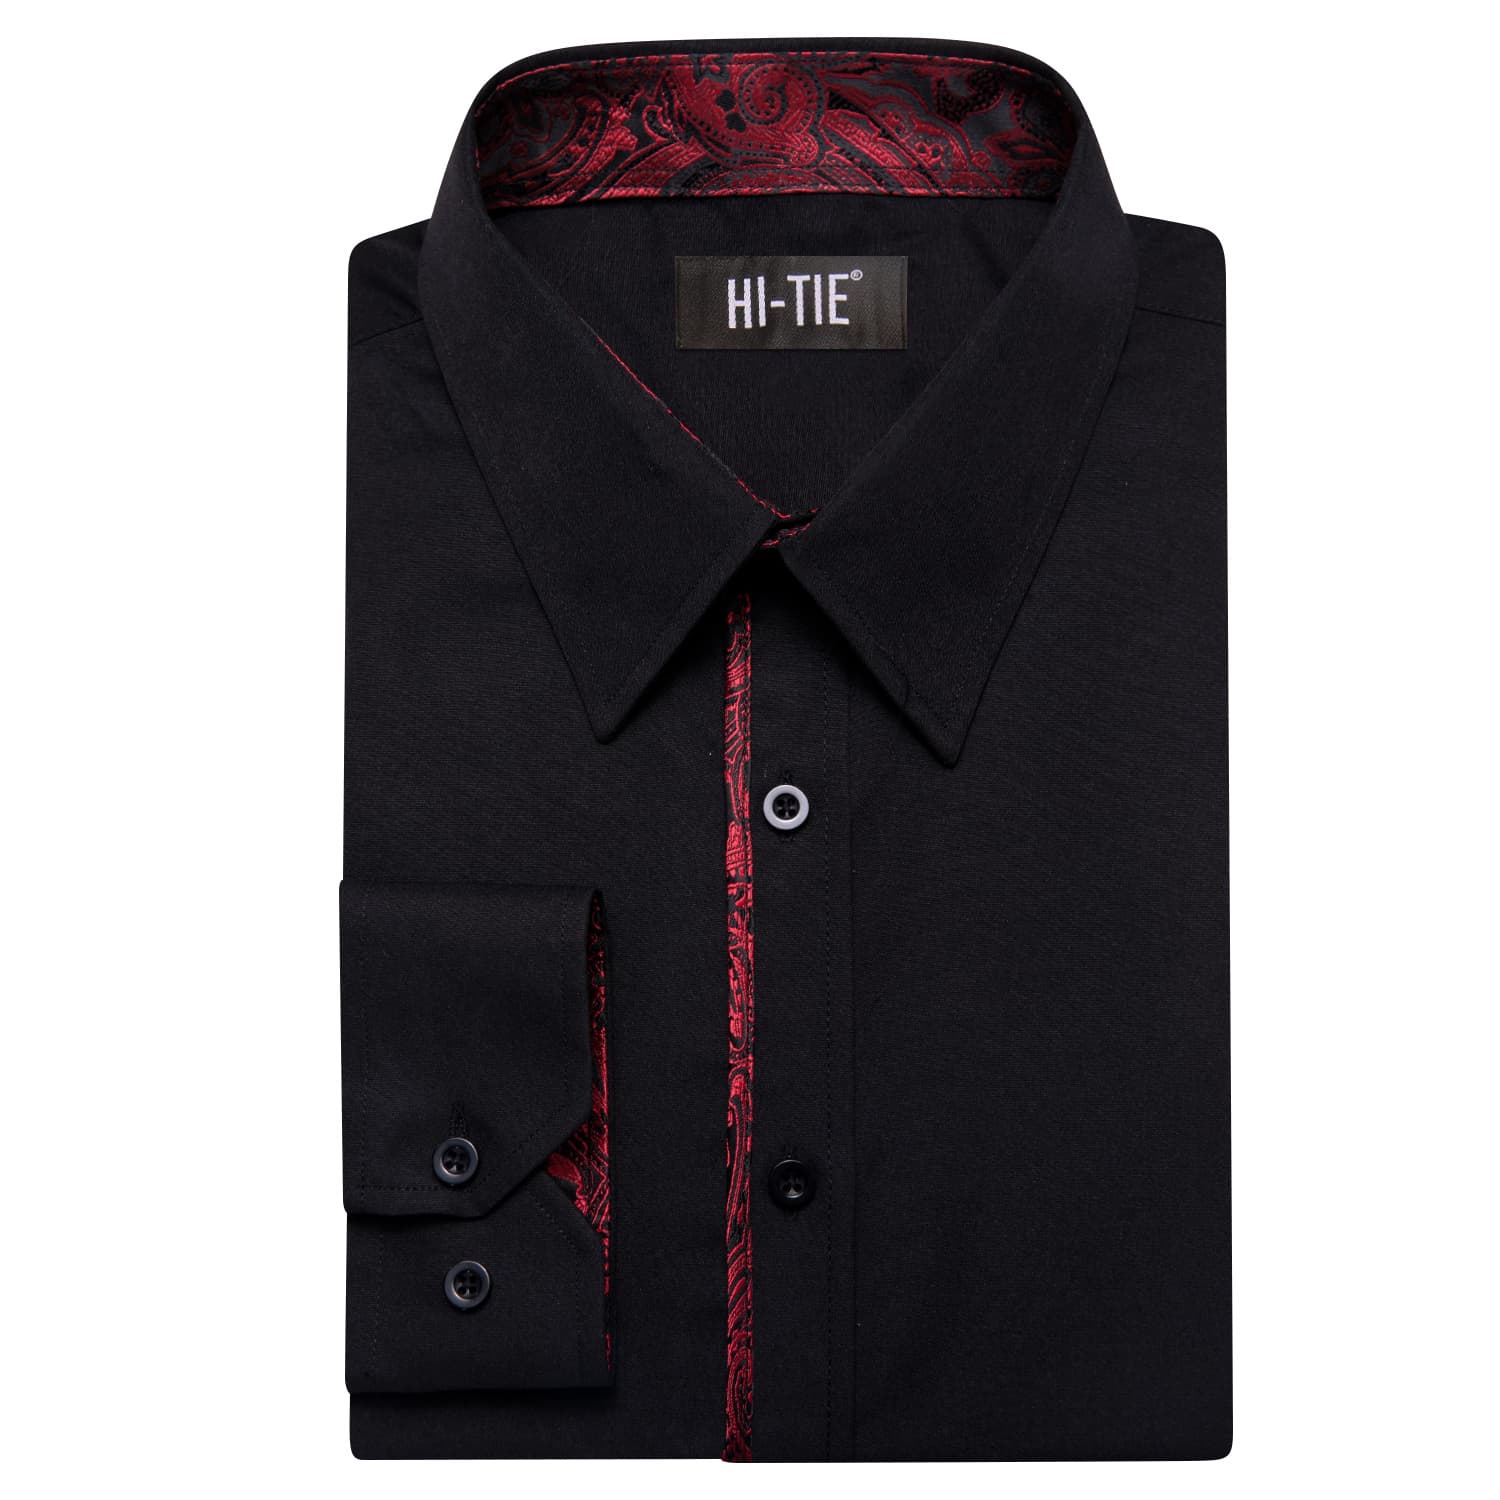 Hi-Tie Black Shirt with DarkRed Jacquard Collar Solid Shirt